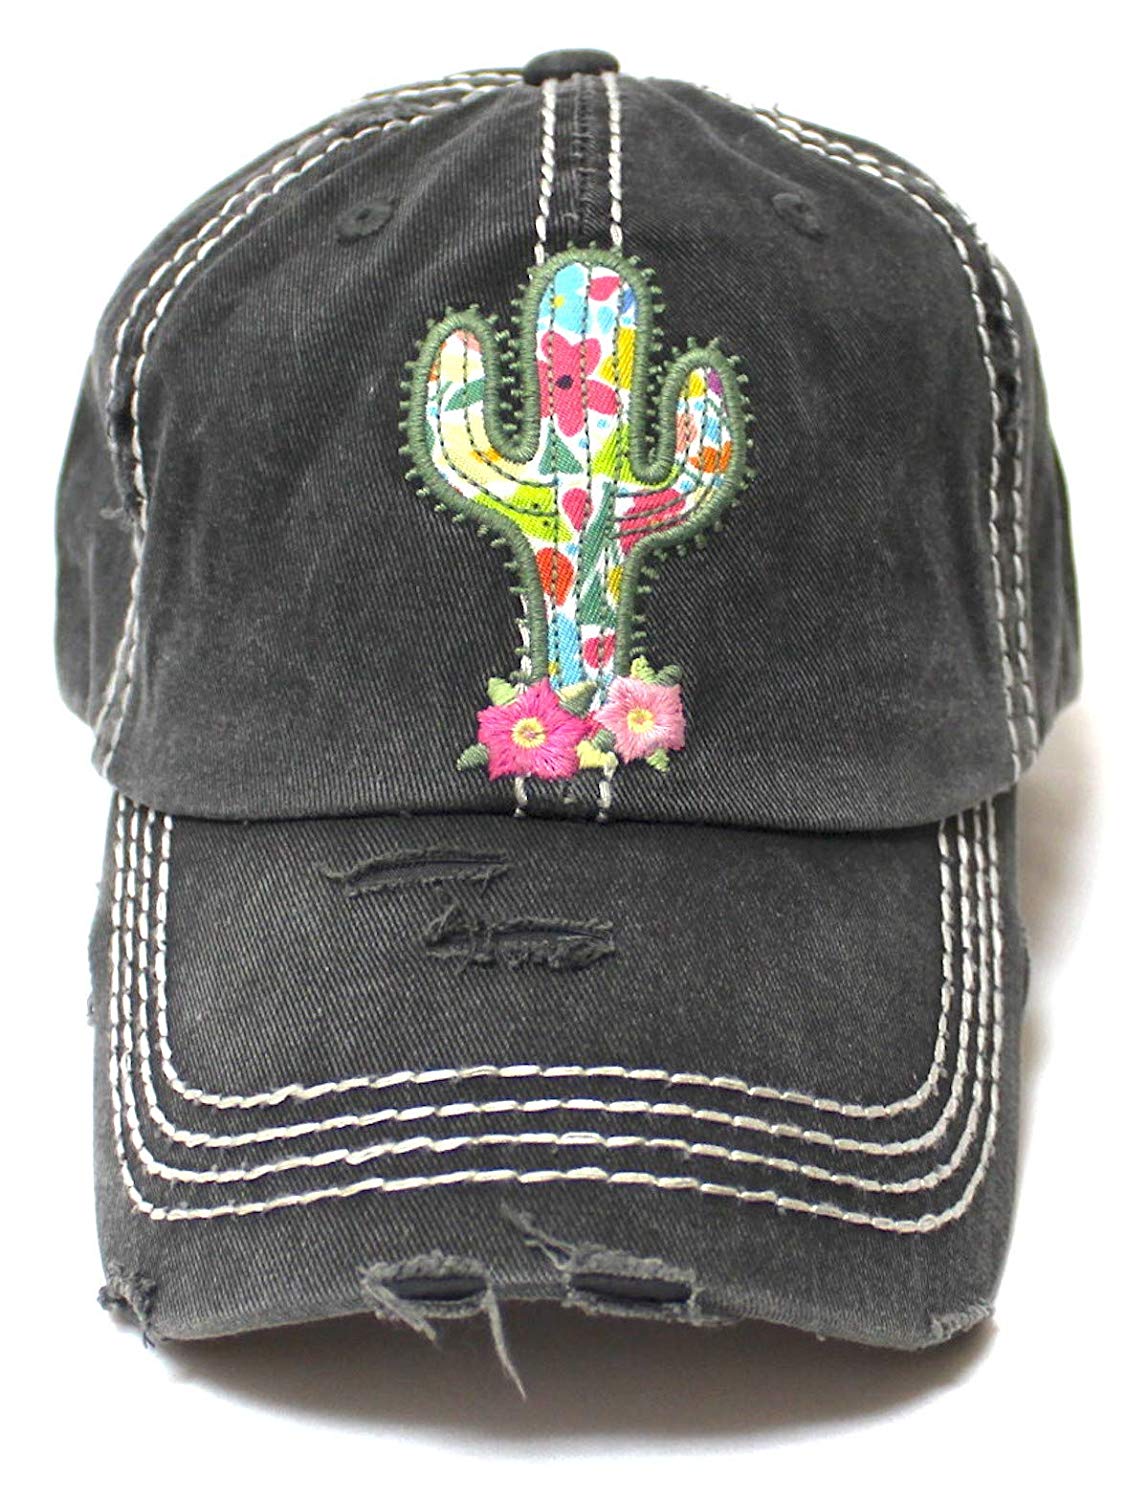 Cactus Floral Patchwork Embroidery Baseball Cap w/Monogram Bloom Detail, Charcoal - Caps 'N Vintage 